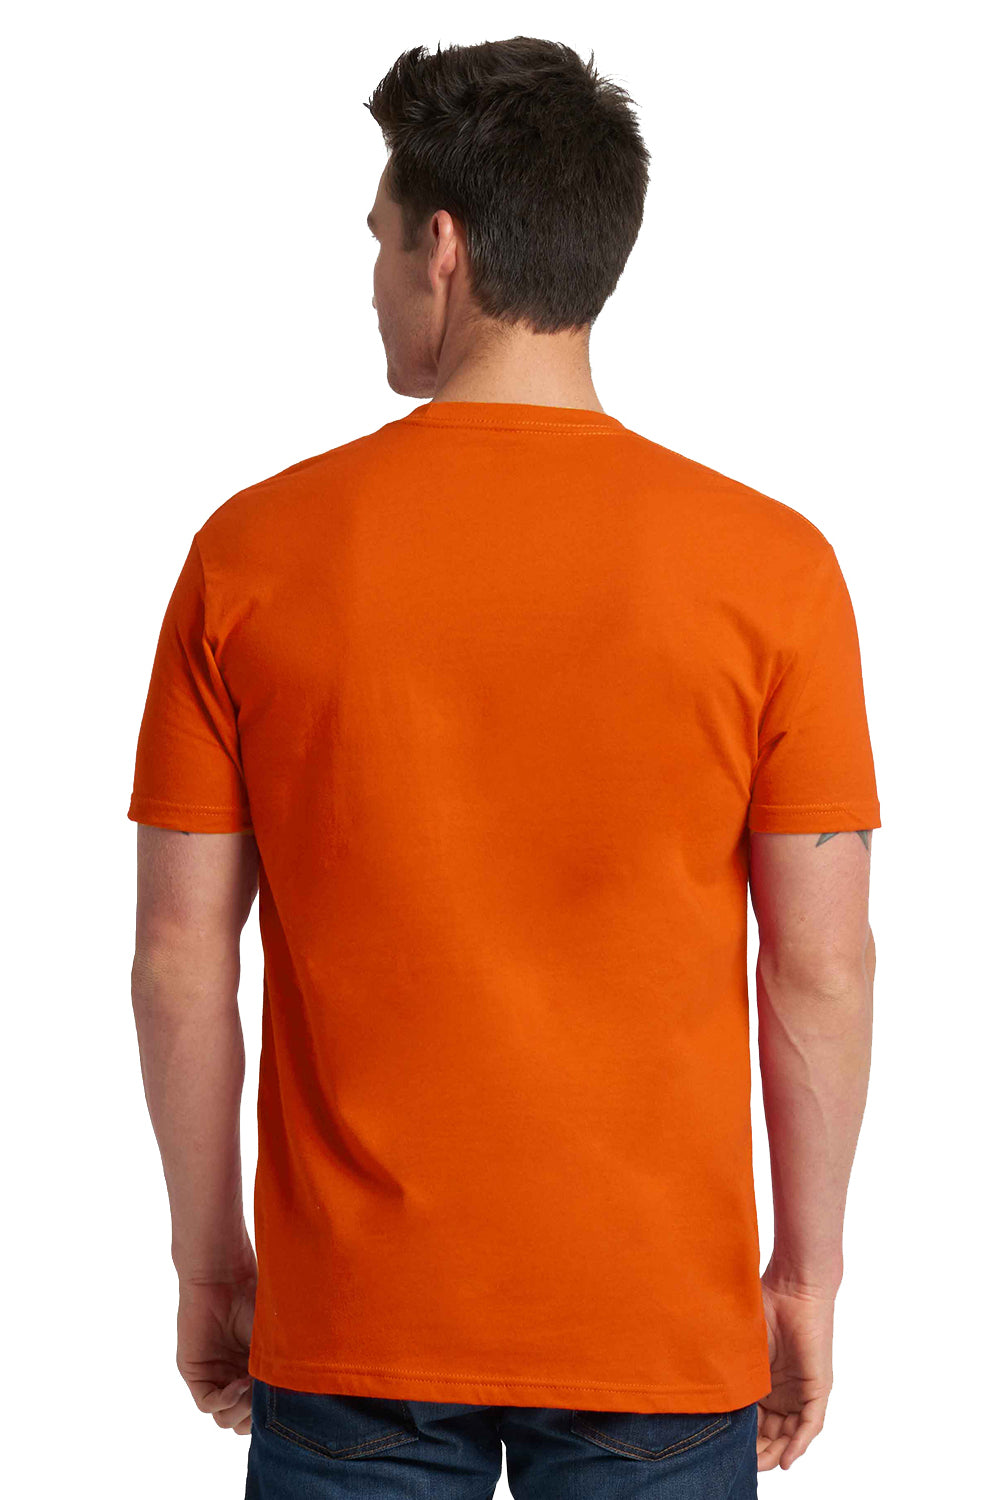 Next Level 3600 Mens Fine Jersey Short Sleeve Crewneck T-Shirt Orange Back